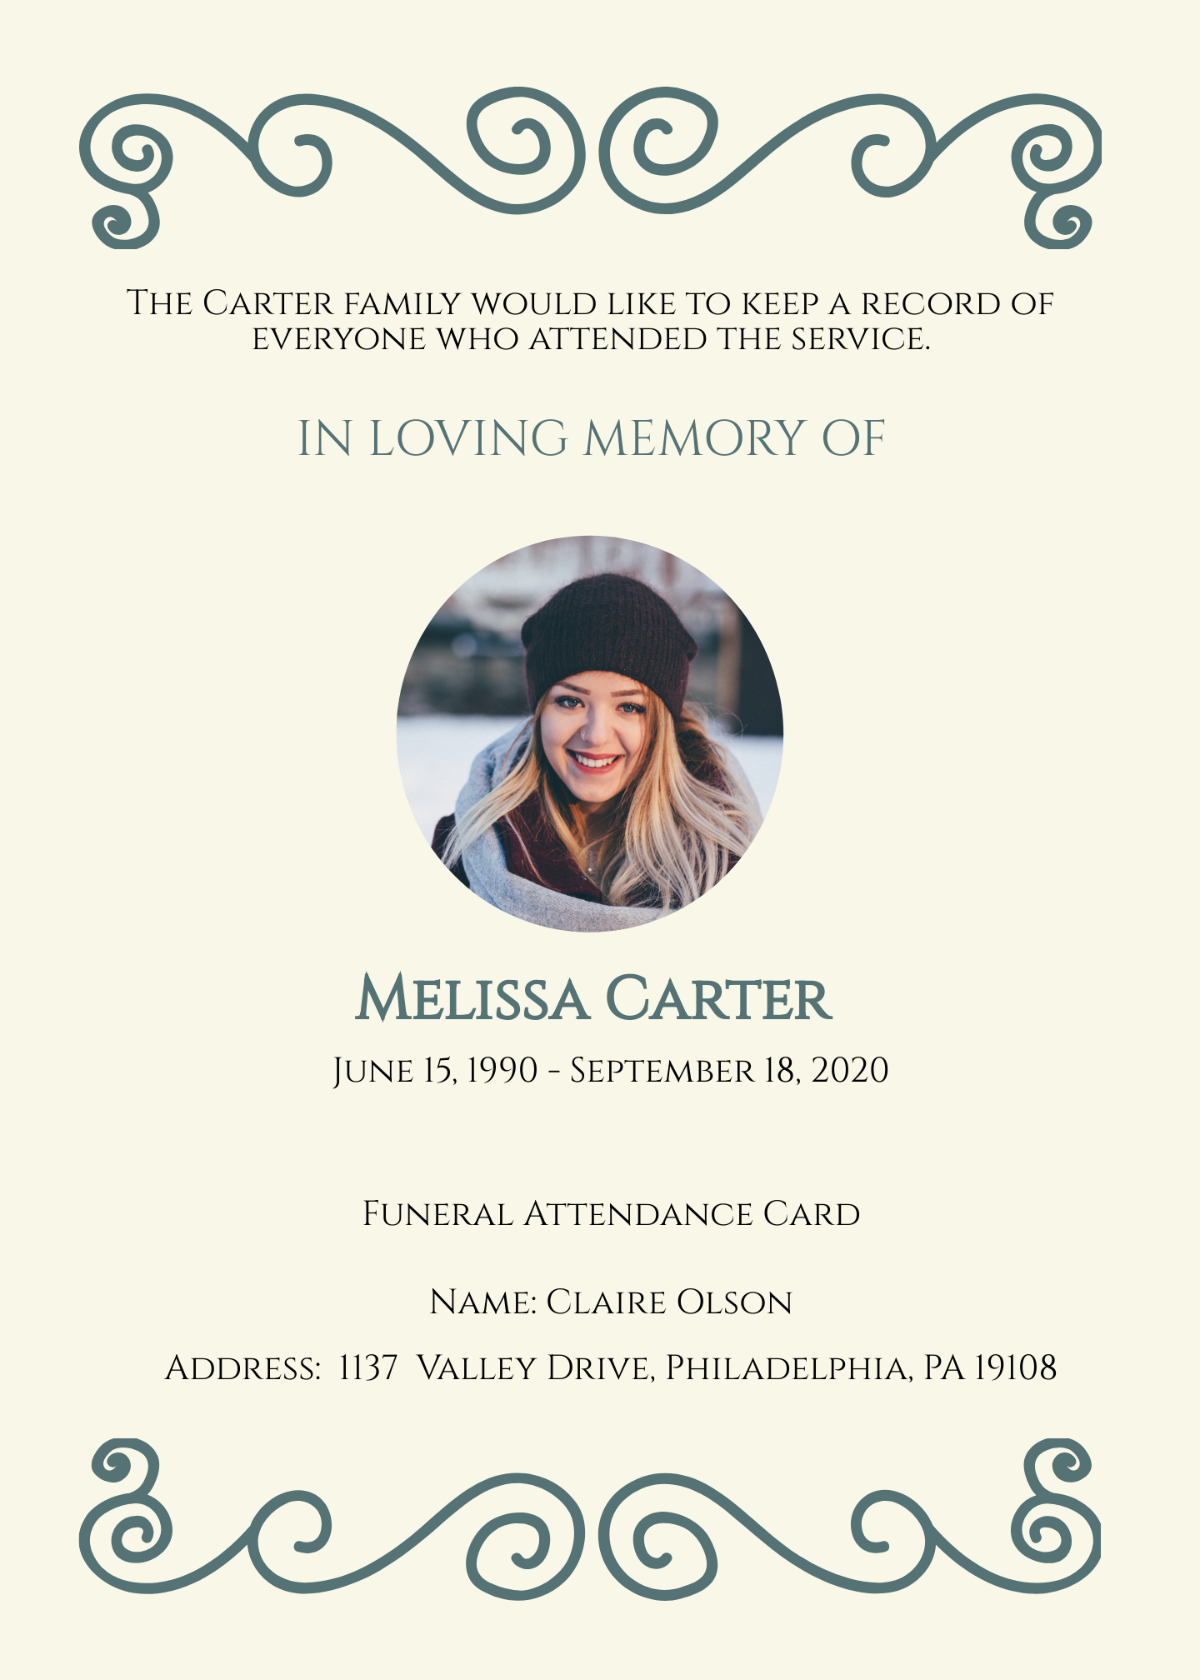 Funeral Service Attendance Card Template